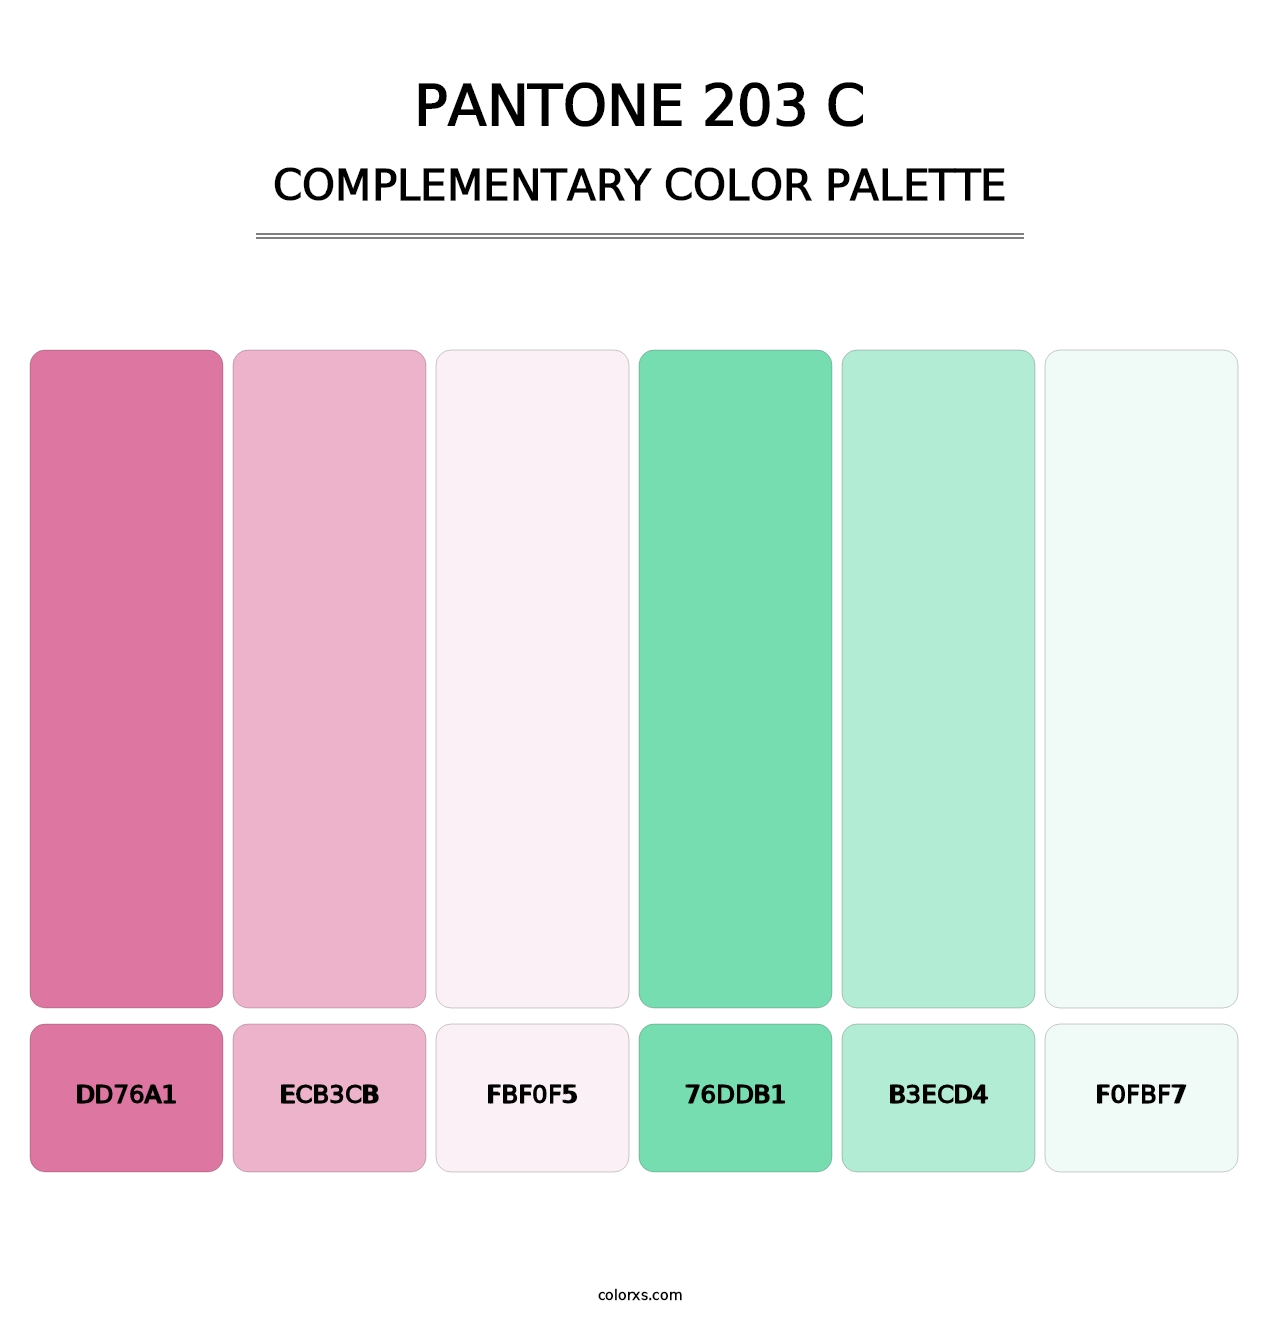 PANTONE 203 C - Complementary Color Palette